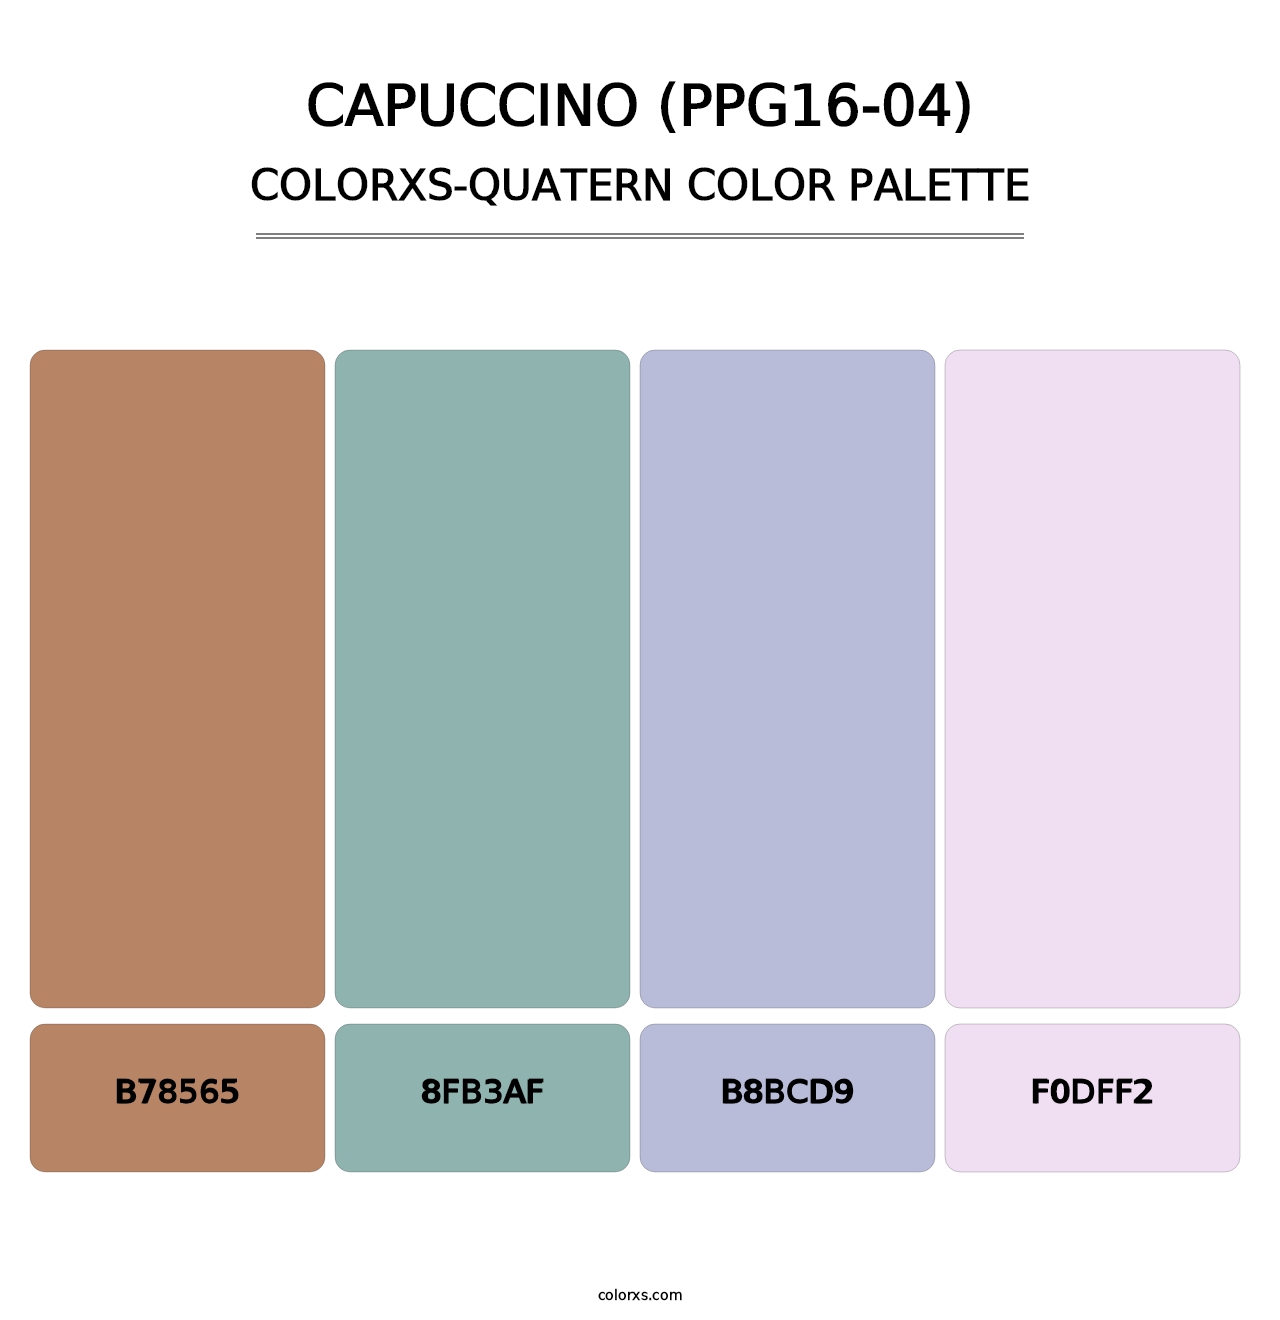 Capuccino (PPG16-04) - Colorxs Quatern Palette